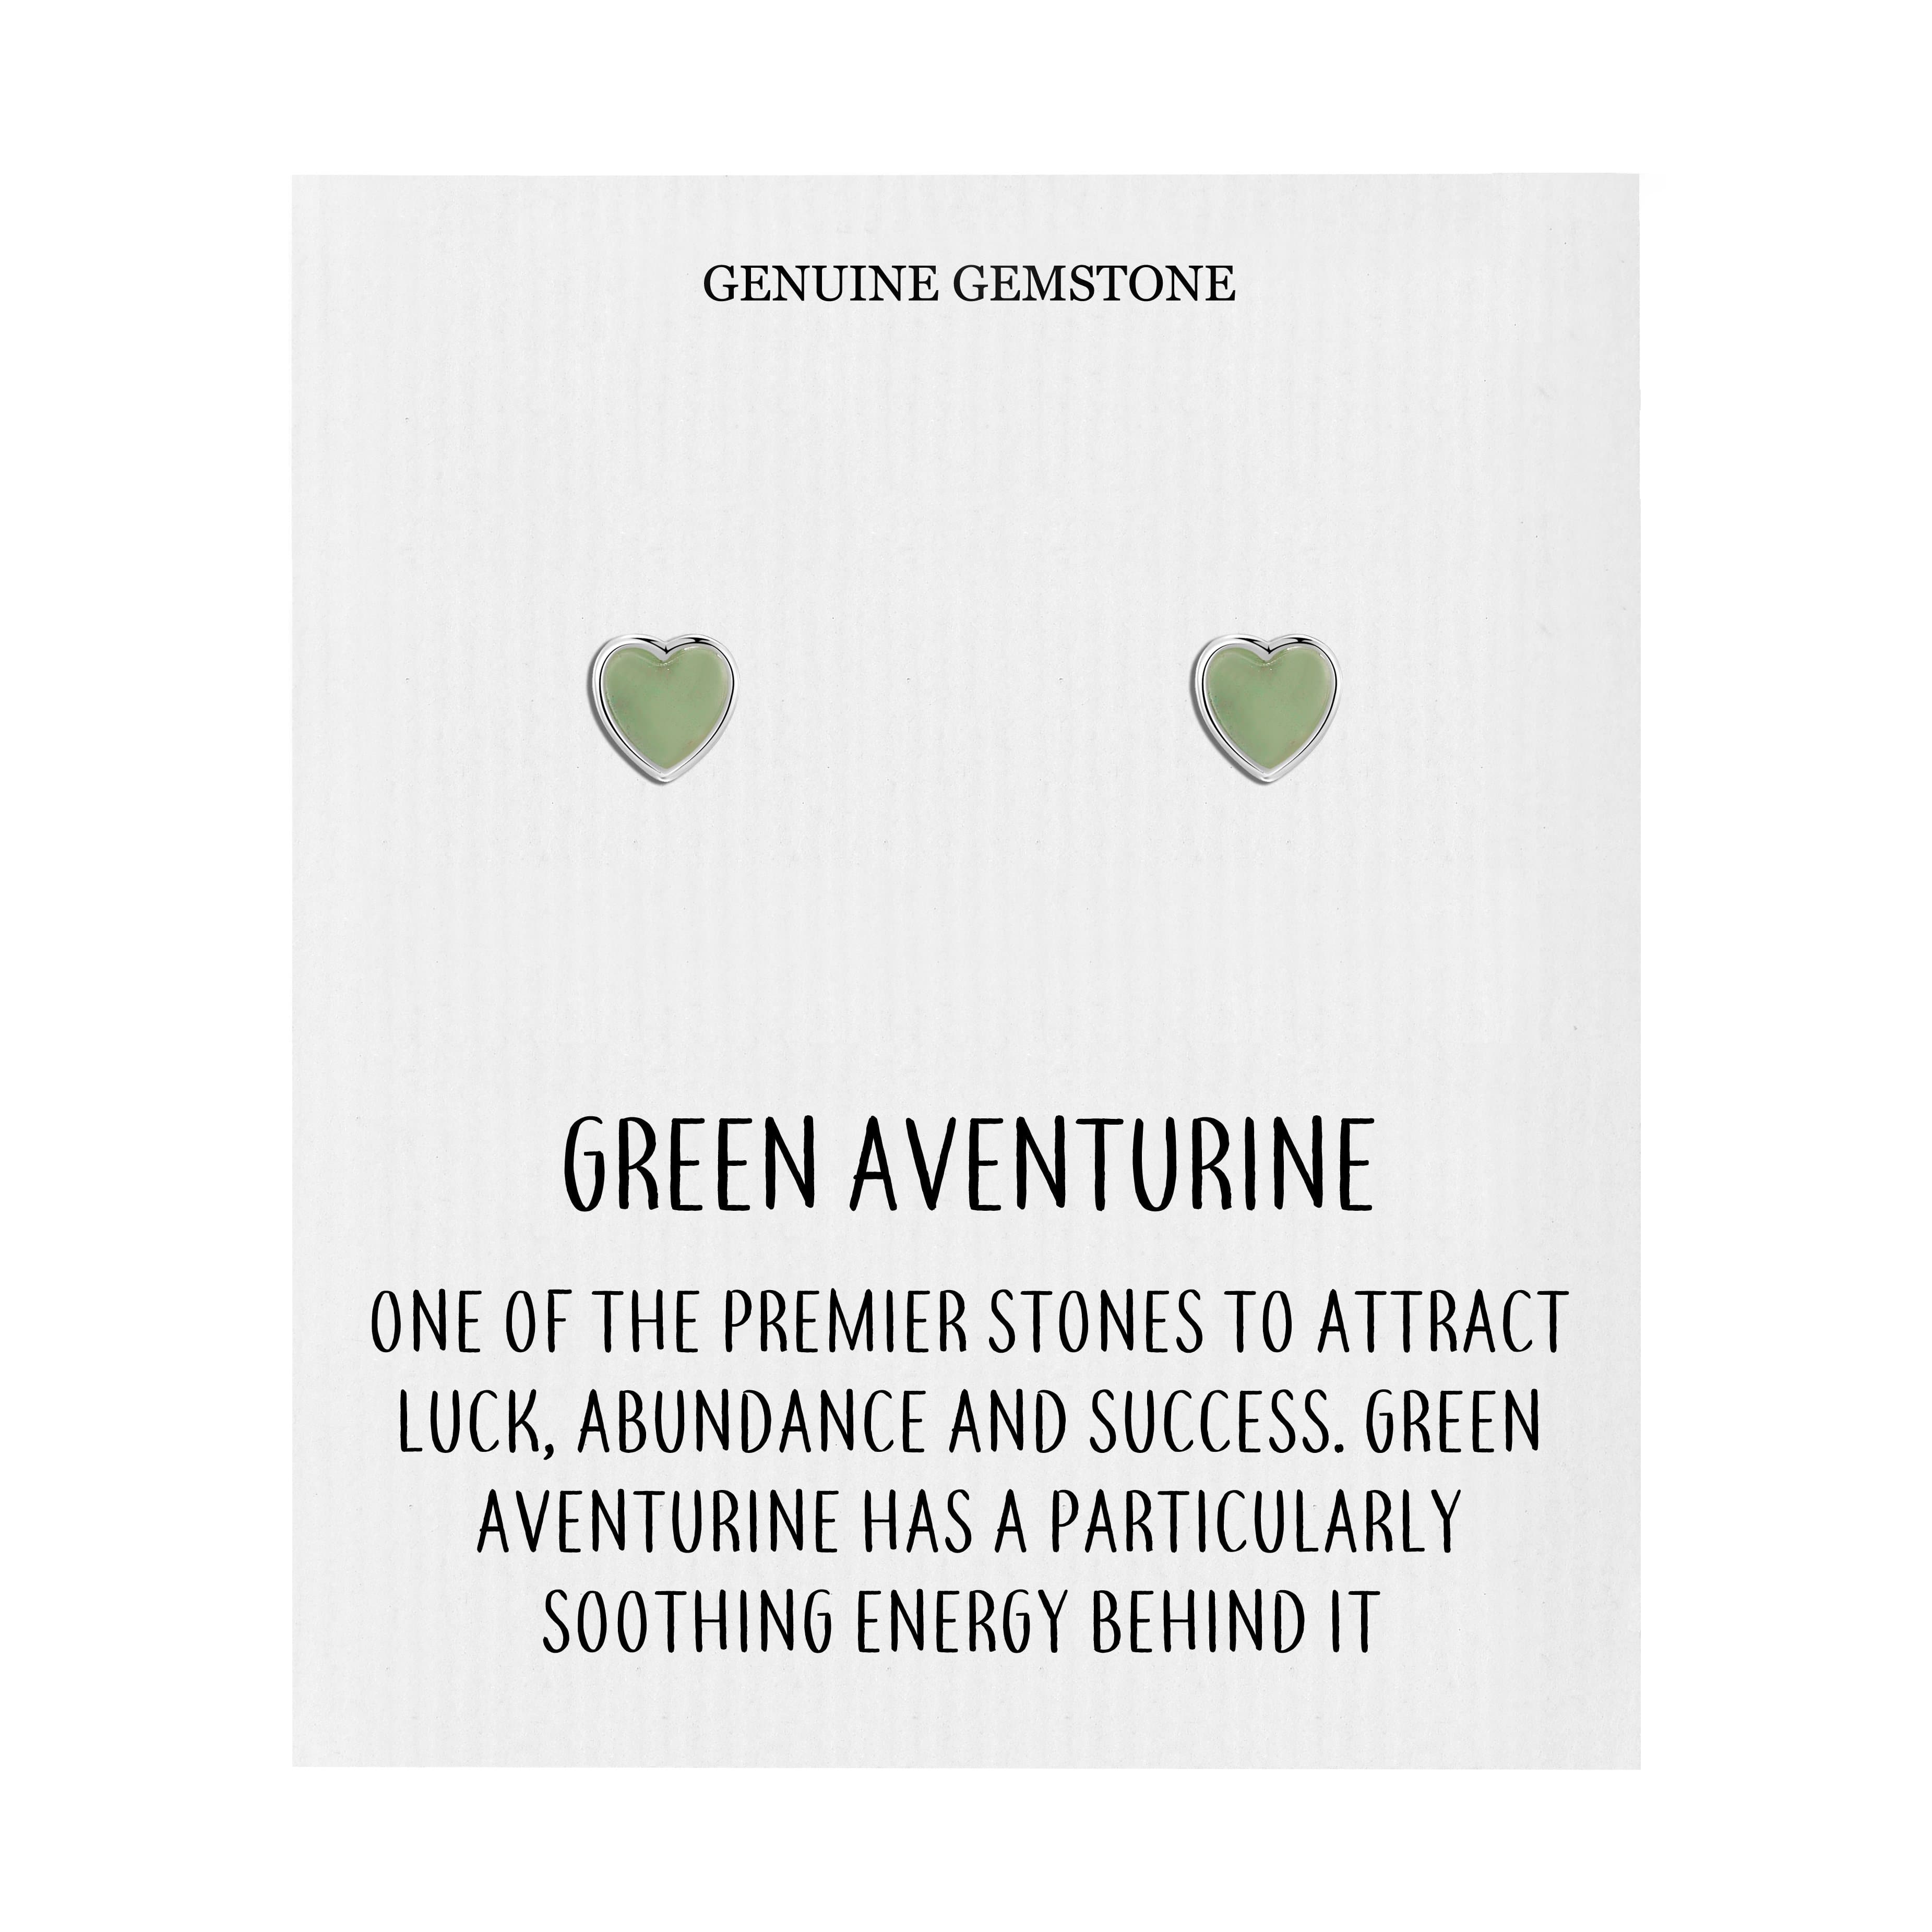 Green Aventurine Heart Stud Earrings with Quote Card by Philip Jones Jewellery